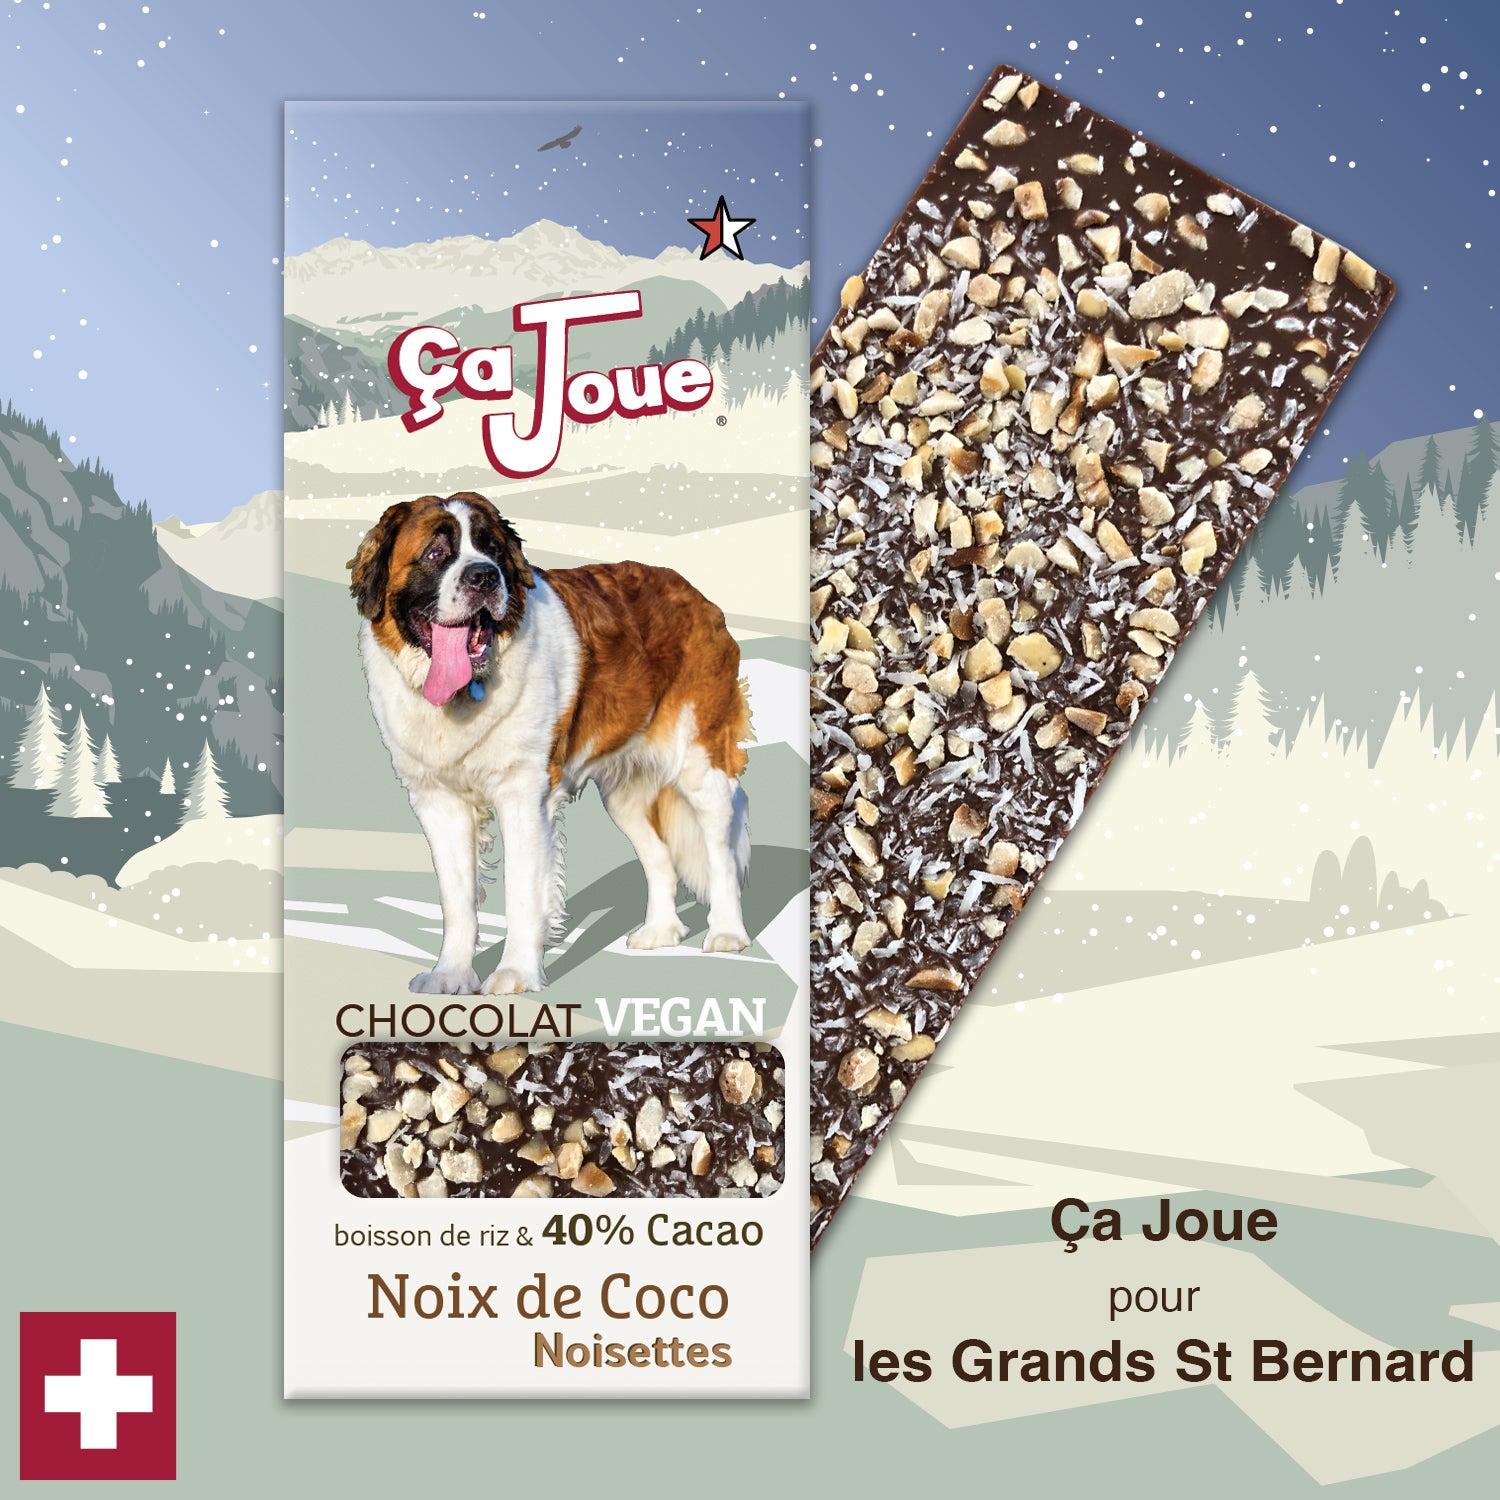 Ça Joue for the St Bernard (Ref-BV3) Chocolate from Val de Bagnes